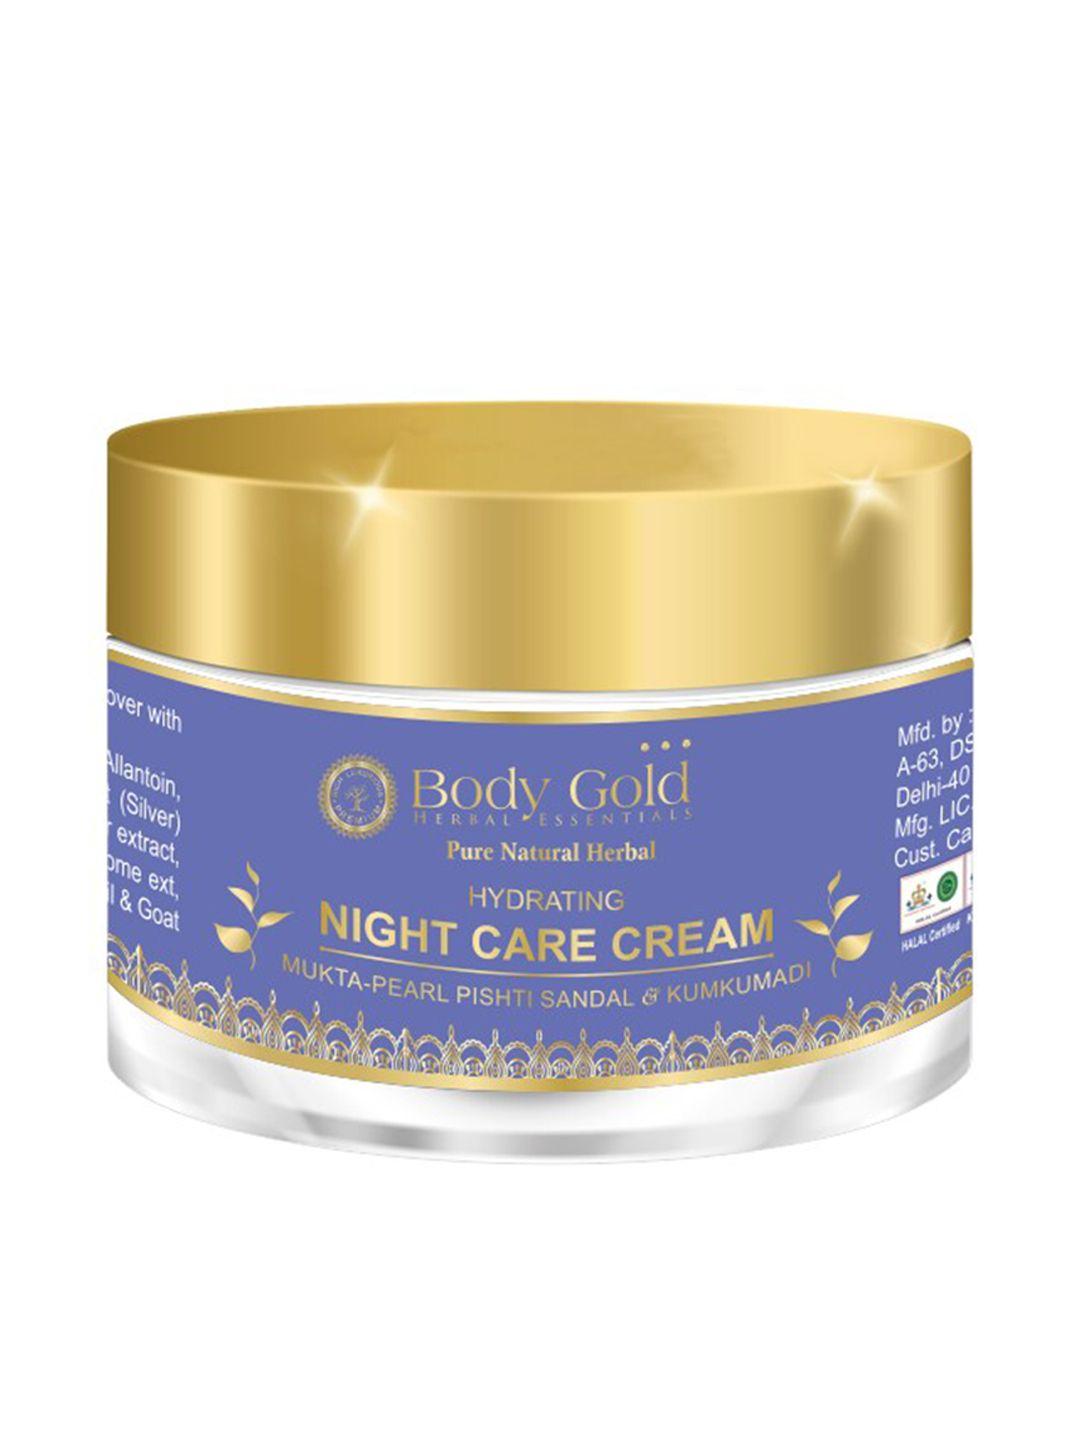 body gold hydrating night care cream with mukta pishti sandal & kumkumadi 50gm